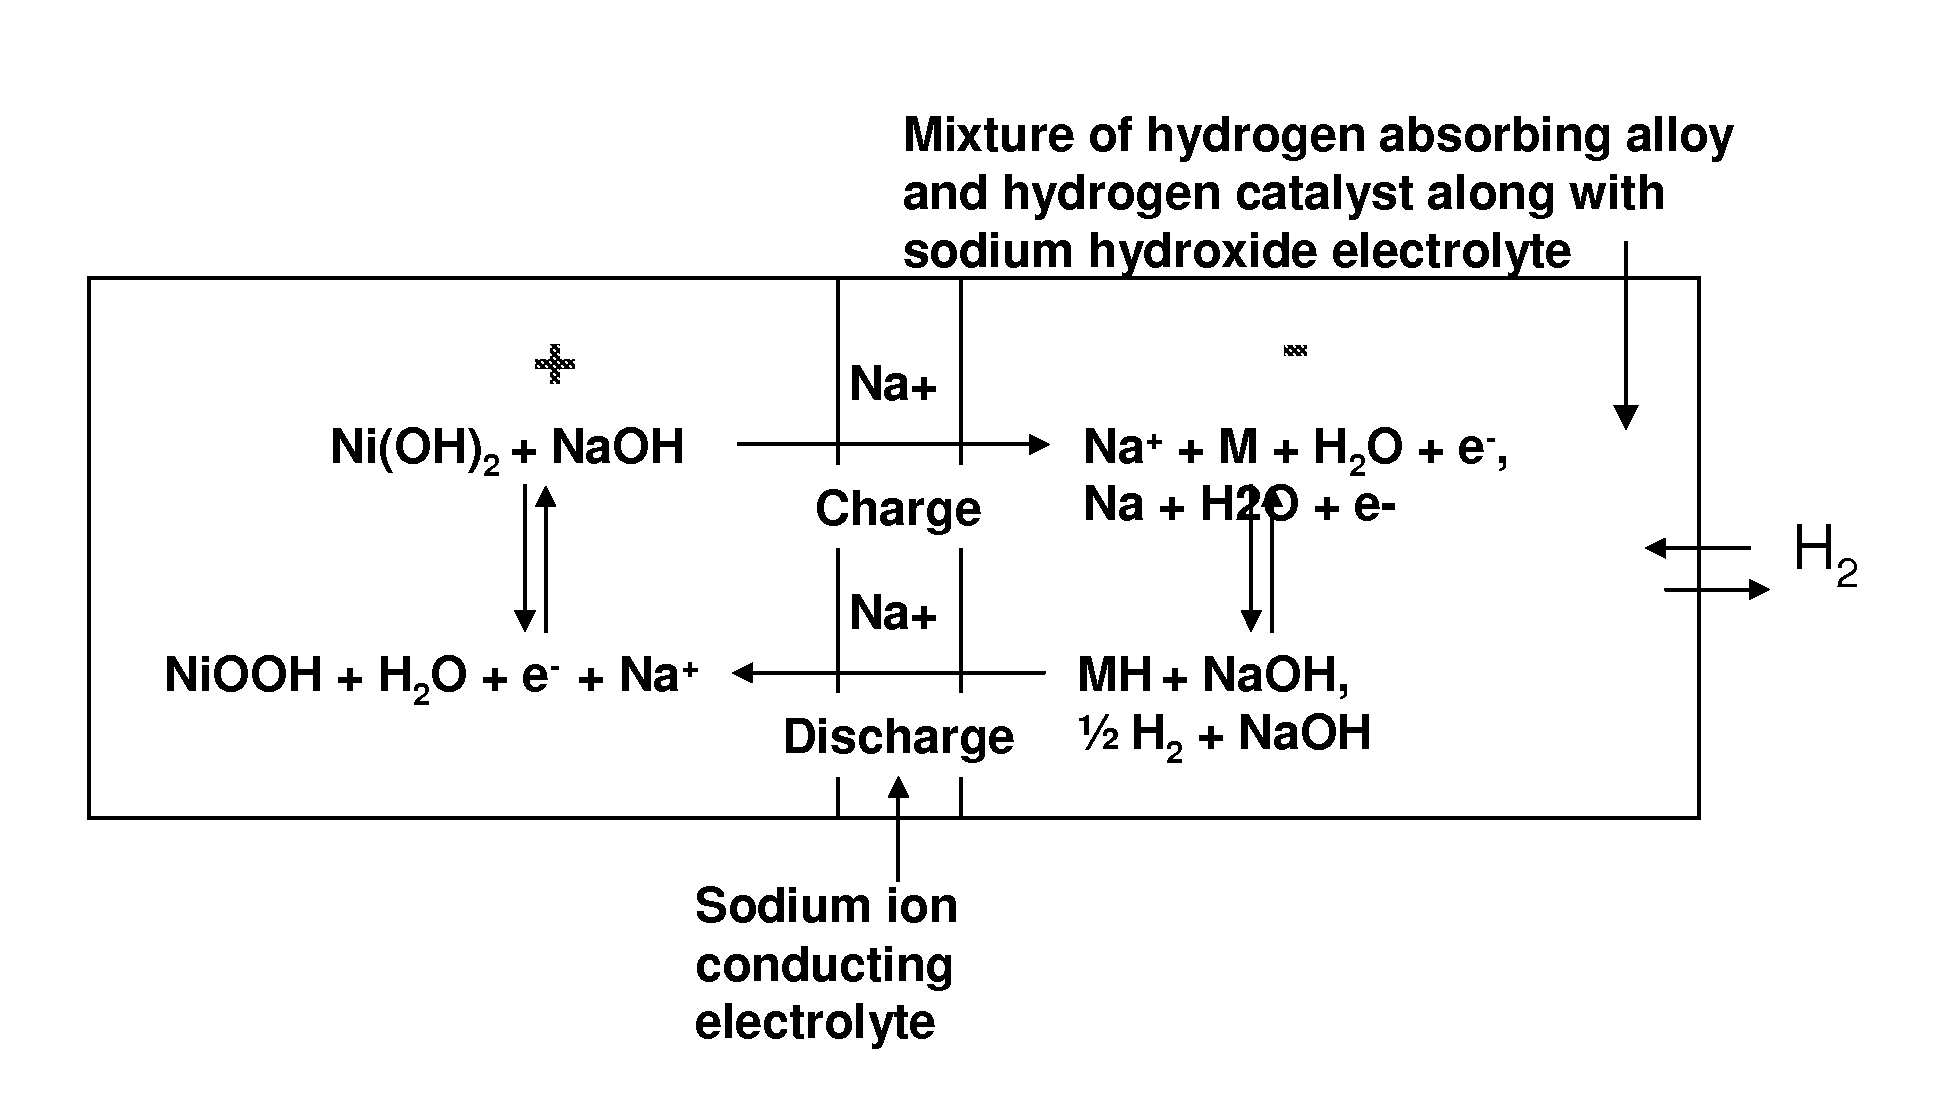 Nickel-metal hydride/hydrogen hybrid battery using alkali ion conducting separator